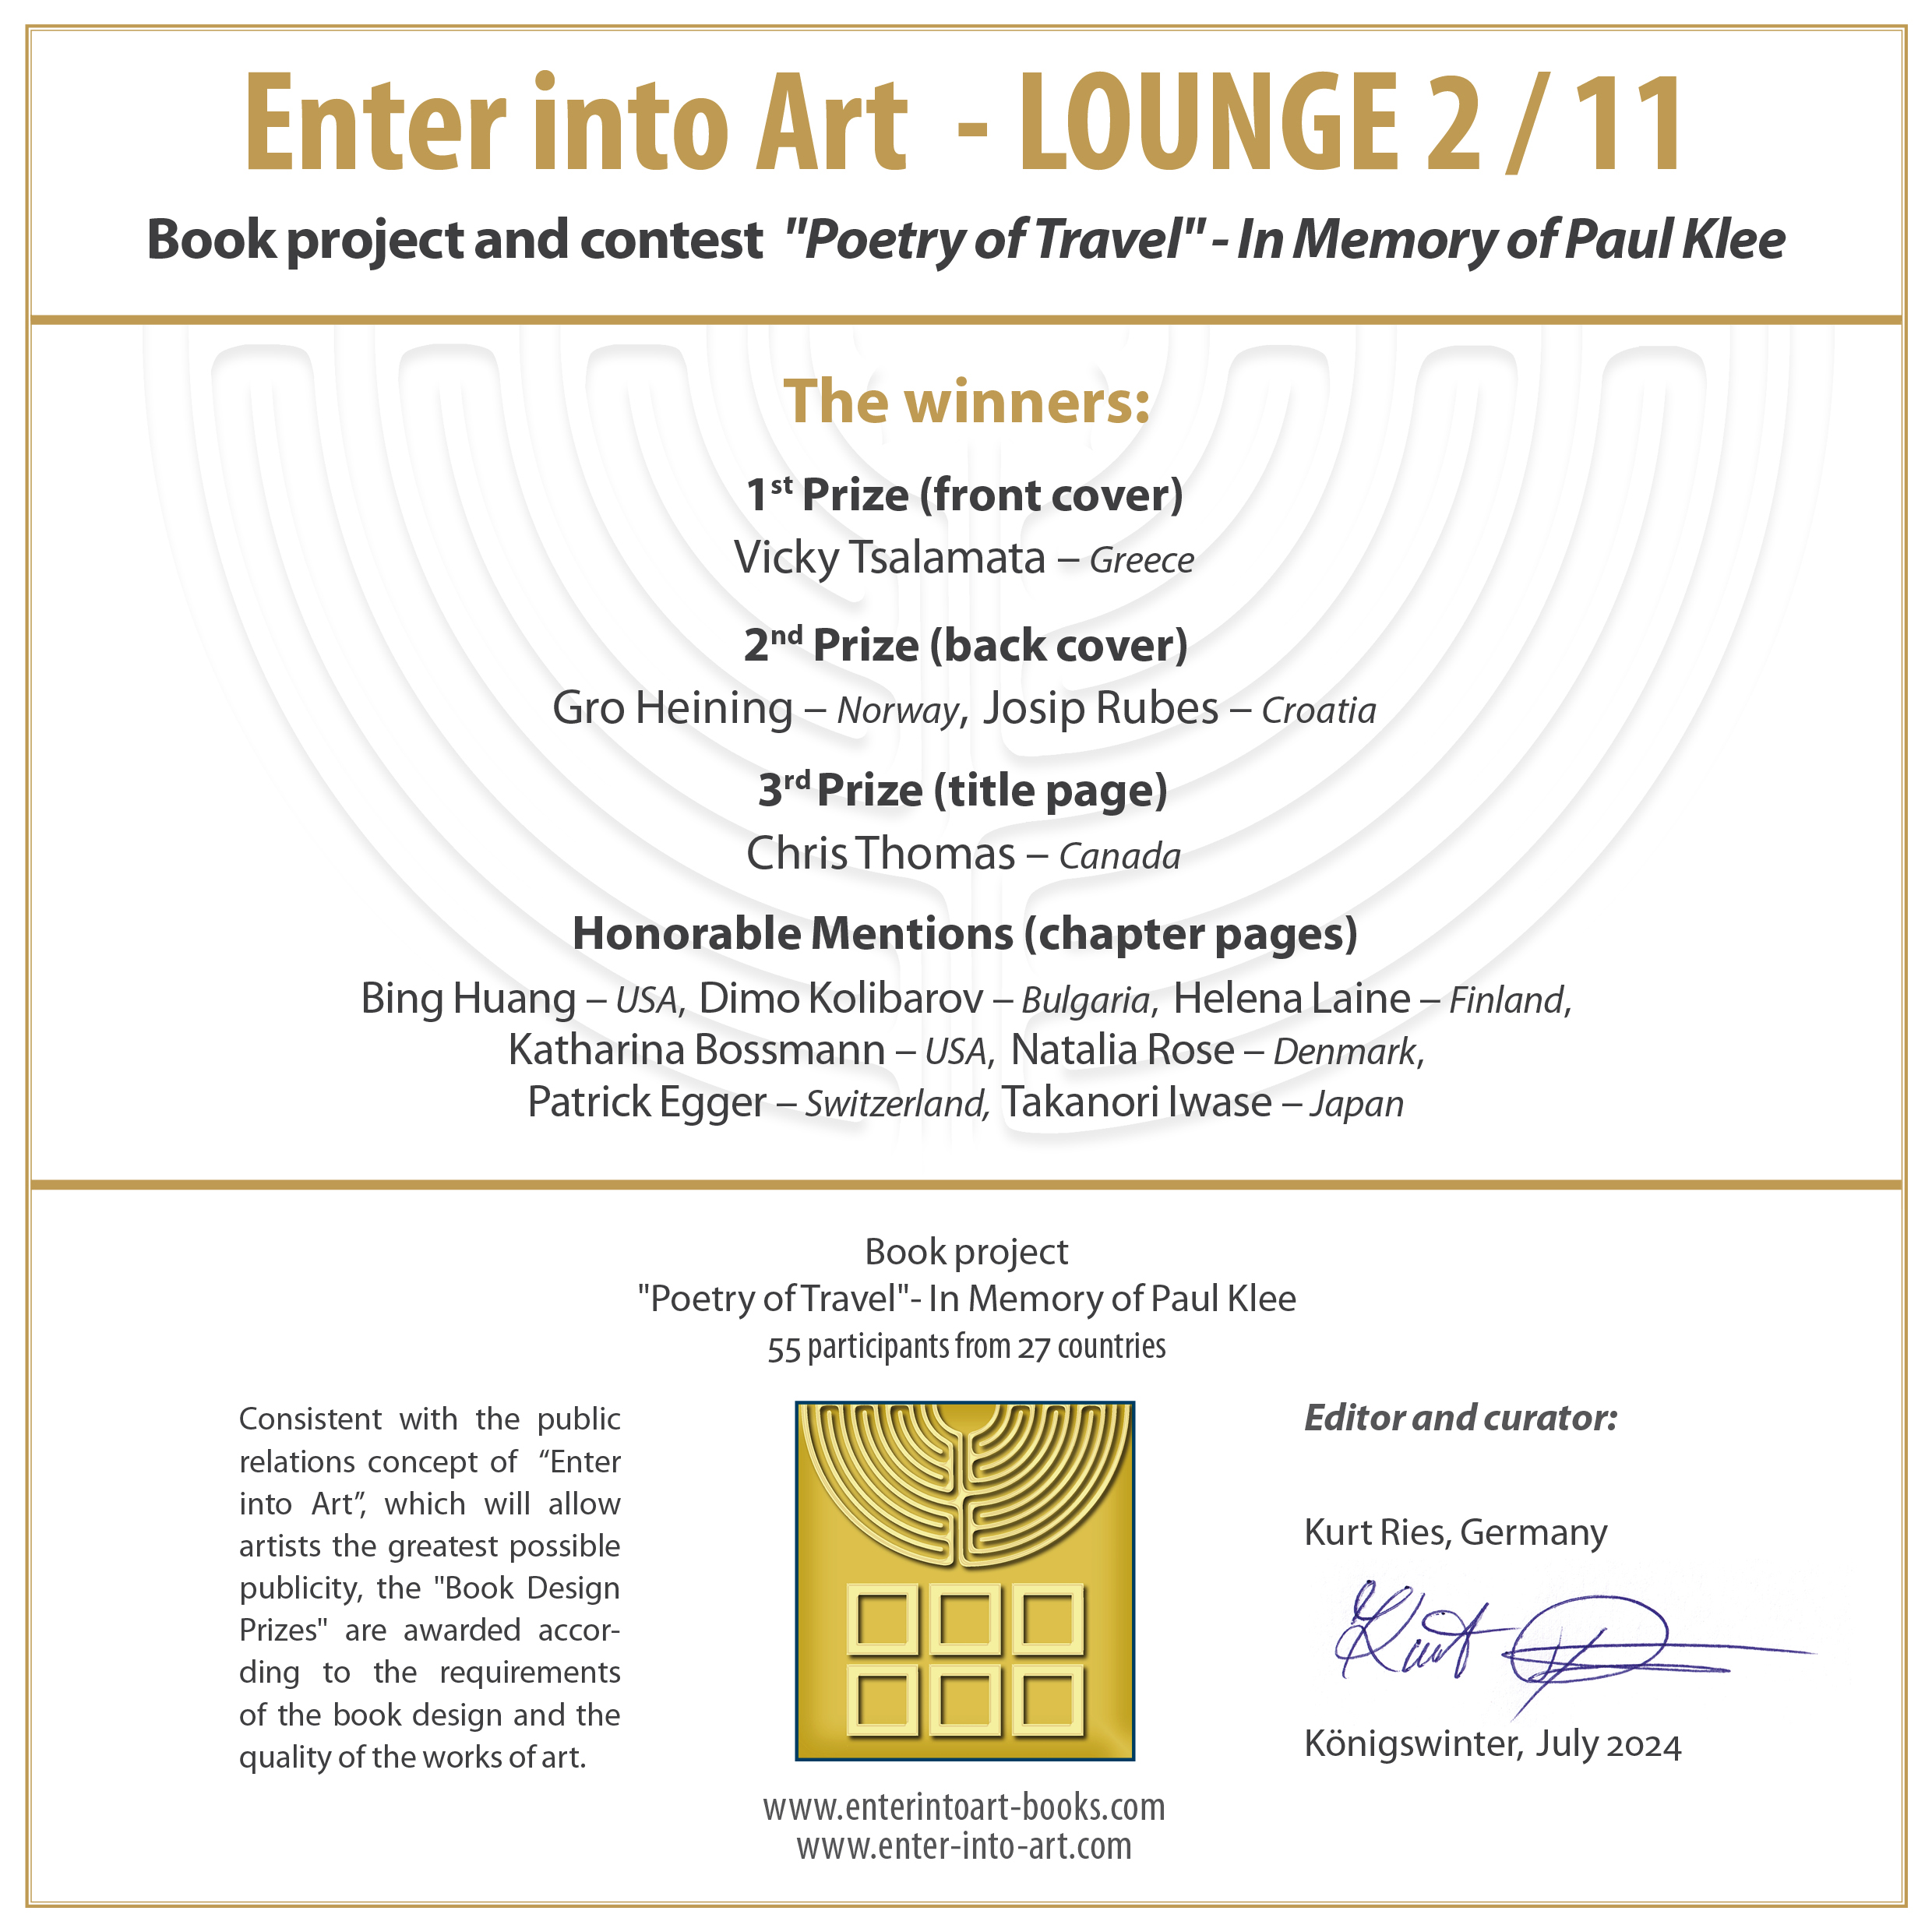 The winner certificate for the “Enter into Art” Art Book